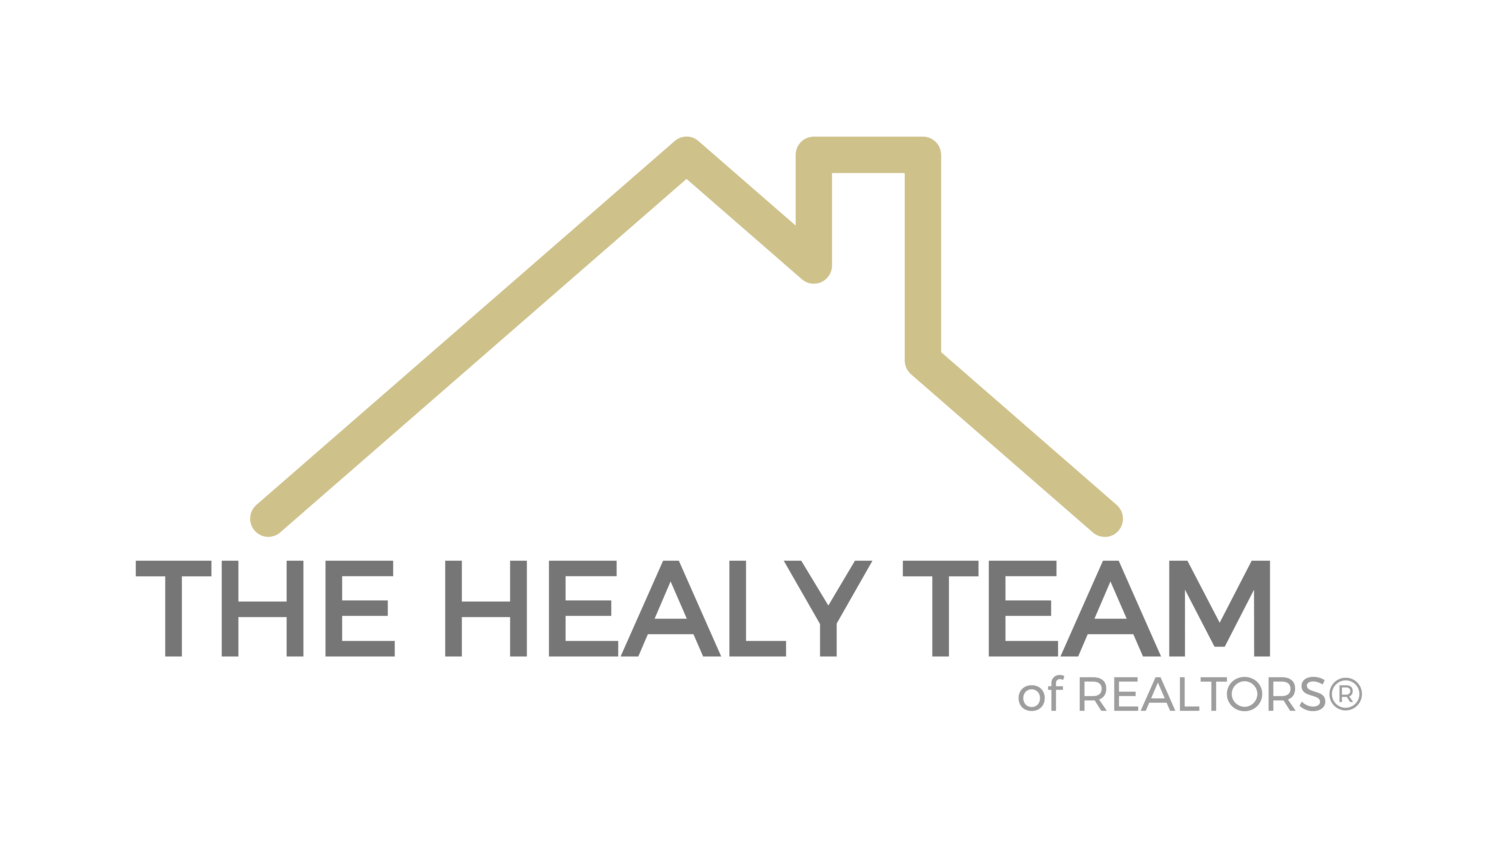 The Healy Team of Realtors